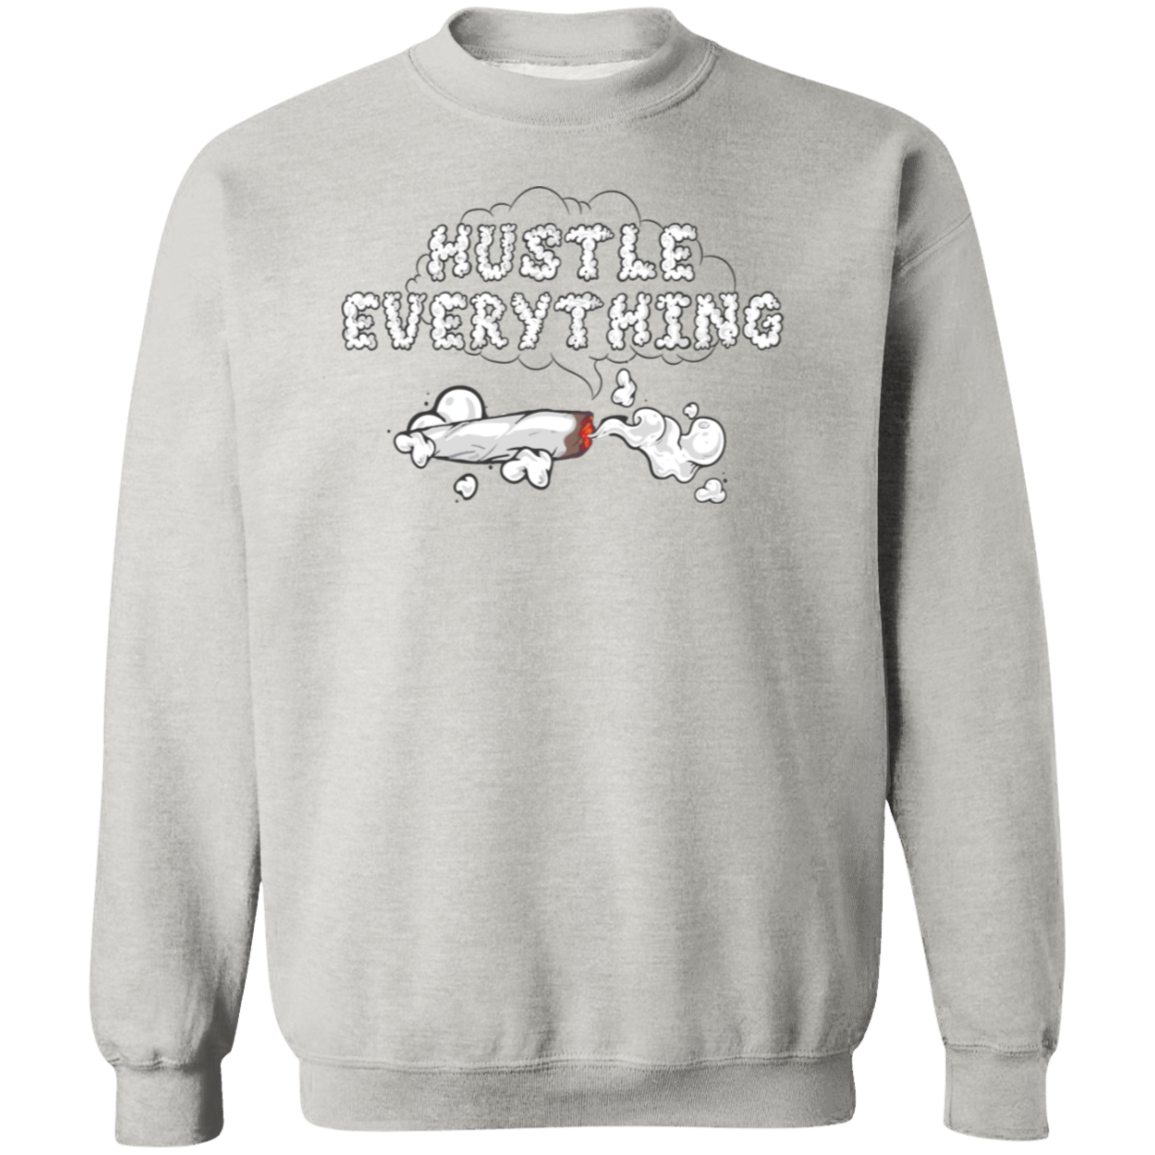 Hustle Everything Premium Crewneck Pullover Sweatshirt - Hustle Everything